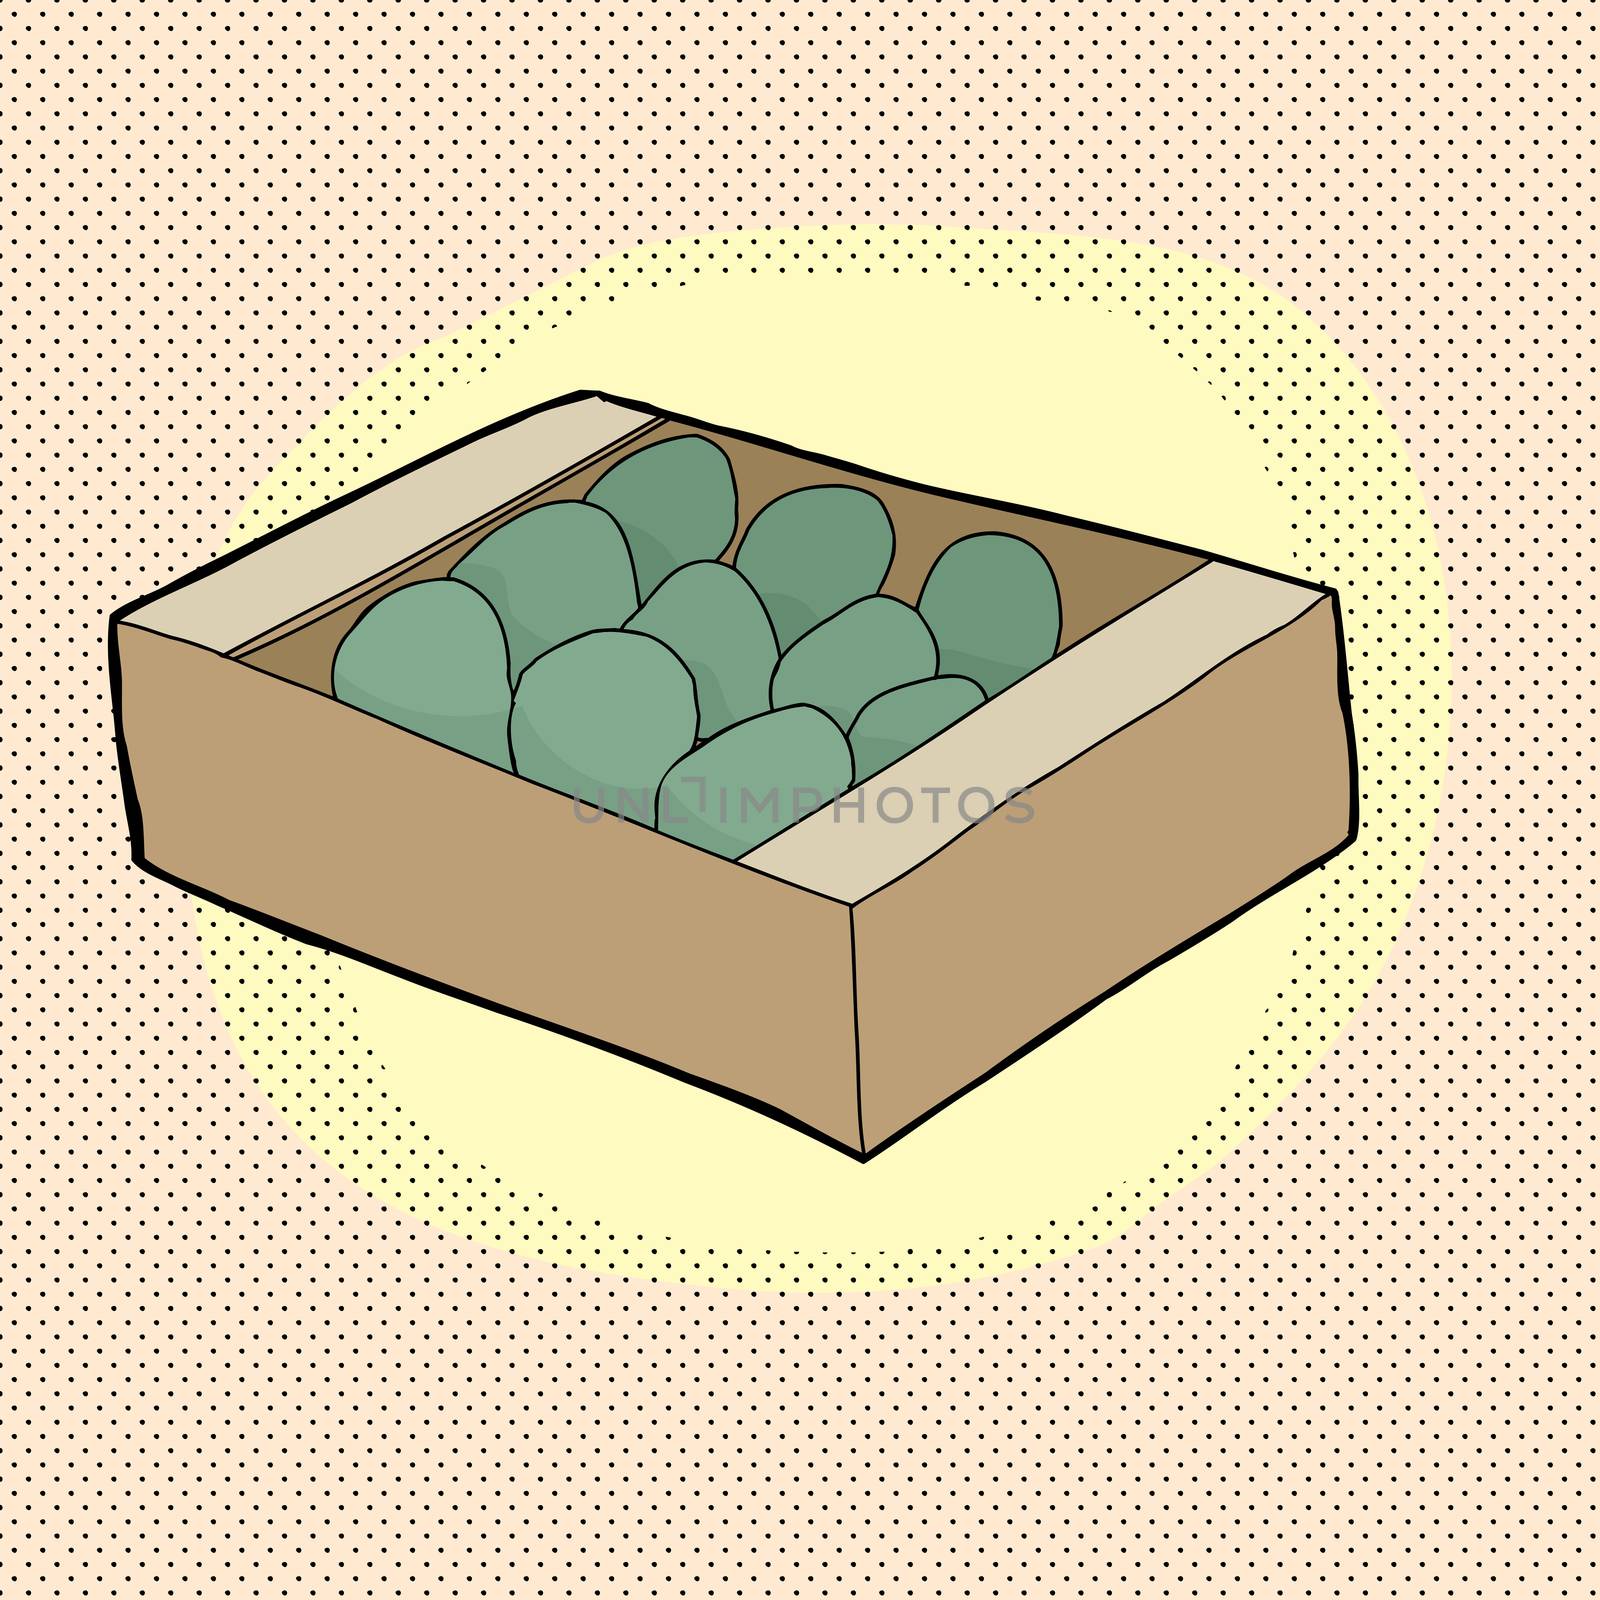 Box of Avocados by TheBlackRhino